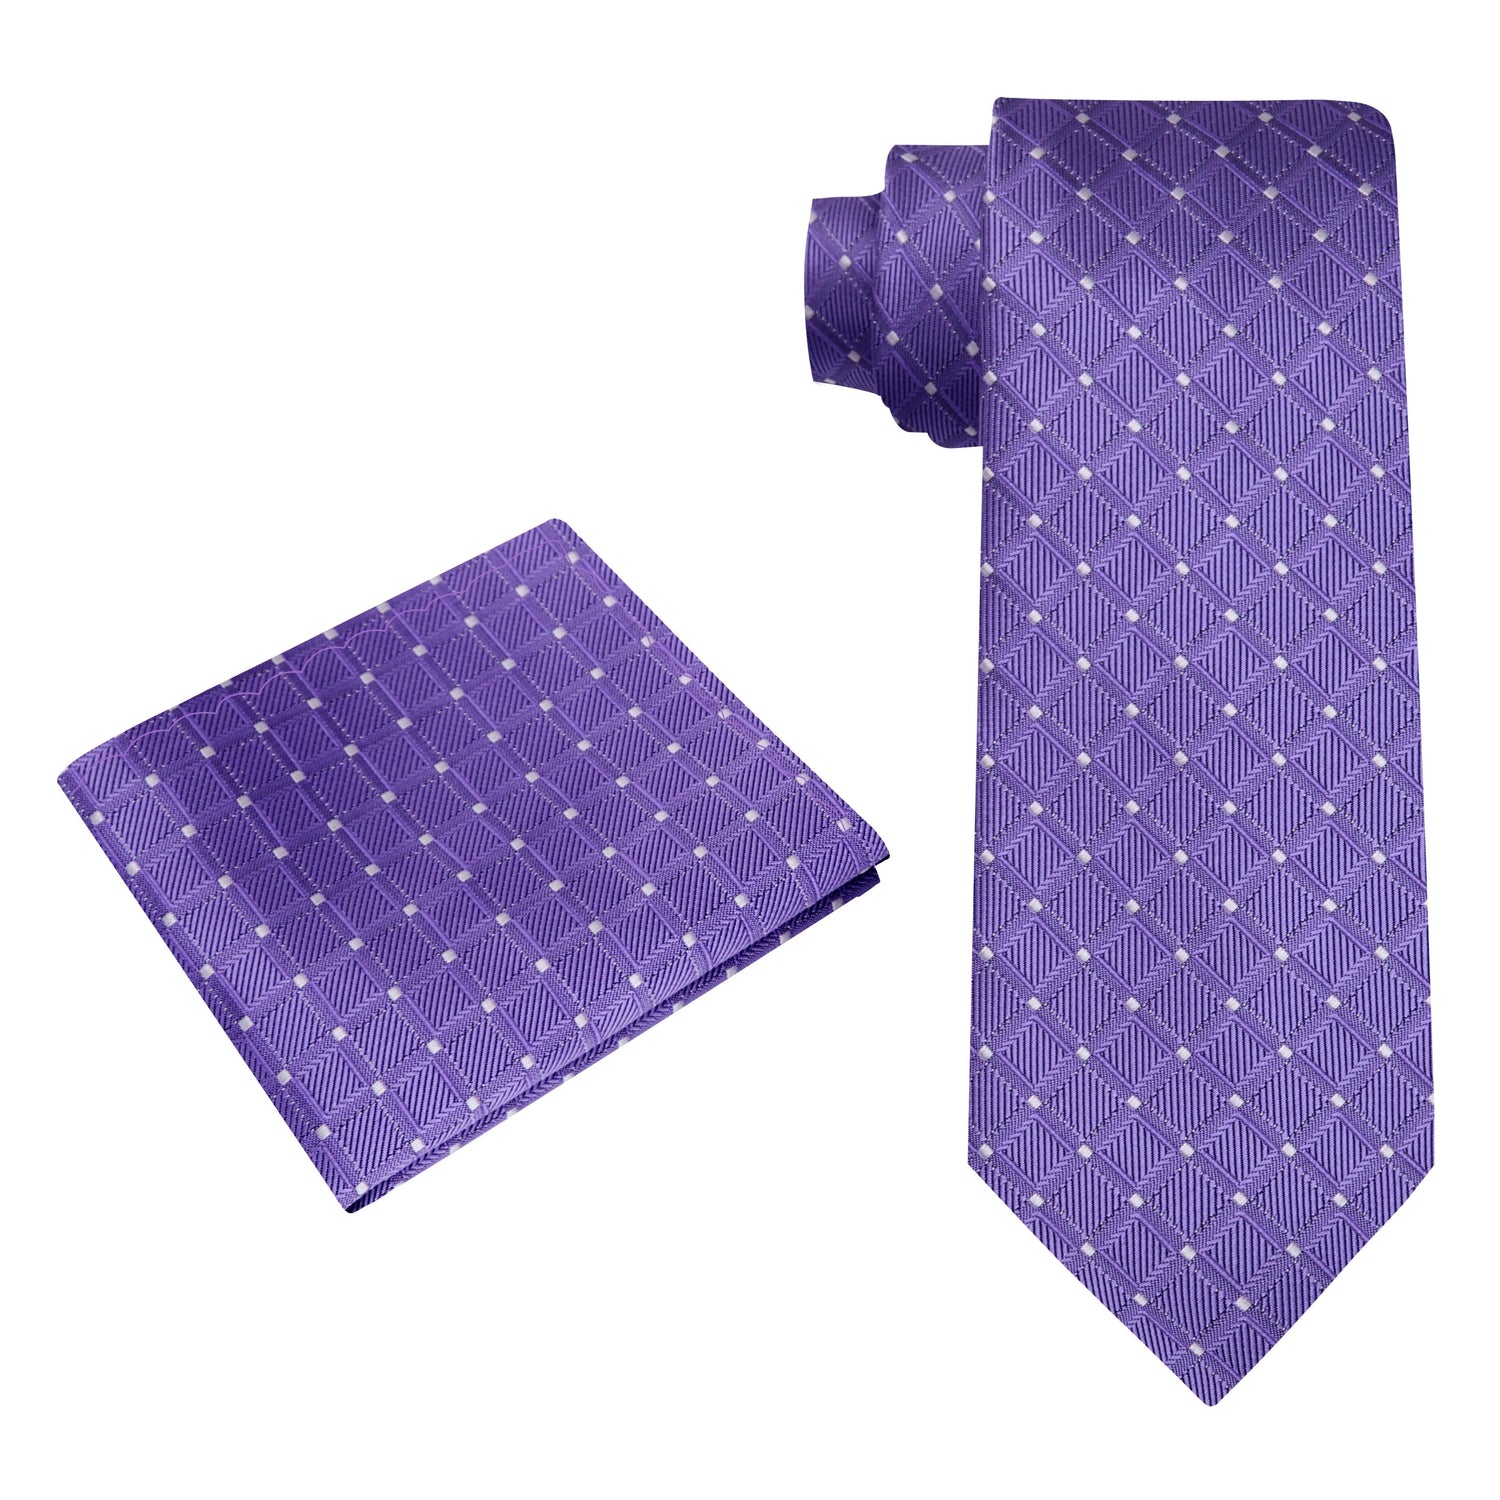 Alt view: A Purple, White Geometric Diamond With Small Check Pattern Silk Necktie, Matching Pocket Square